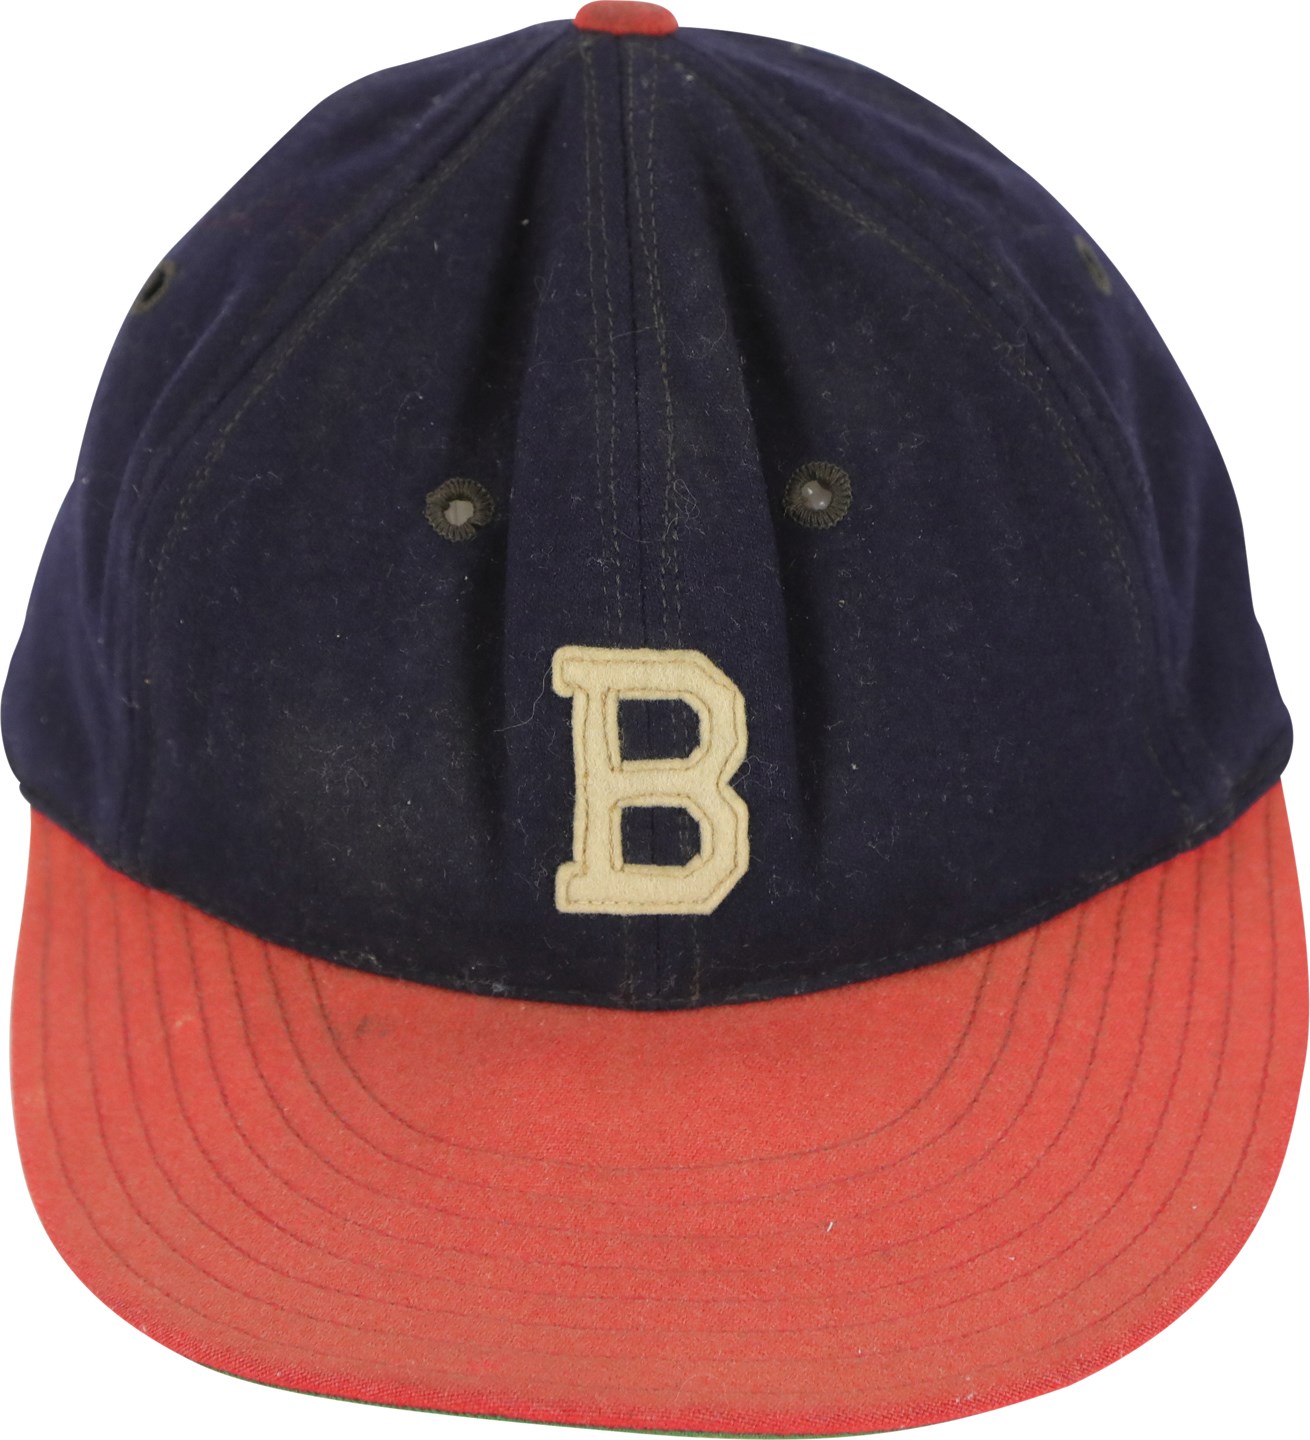 Circa 1950 Johnny Antonelli Boston Braves Game Used Hat